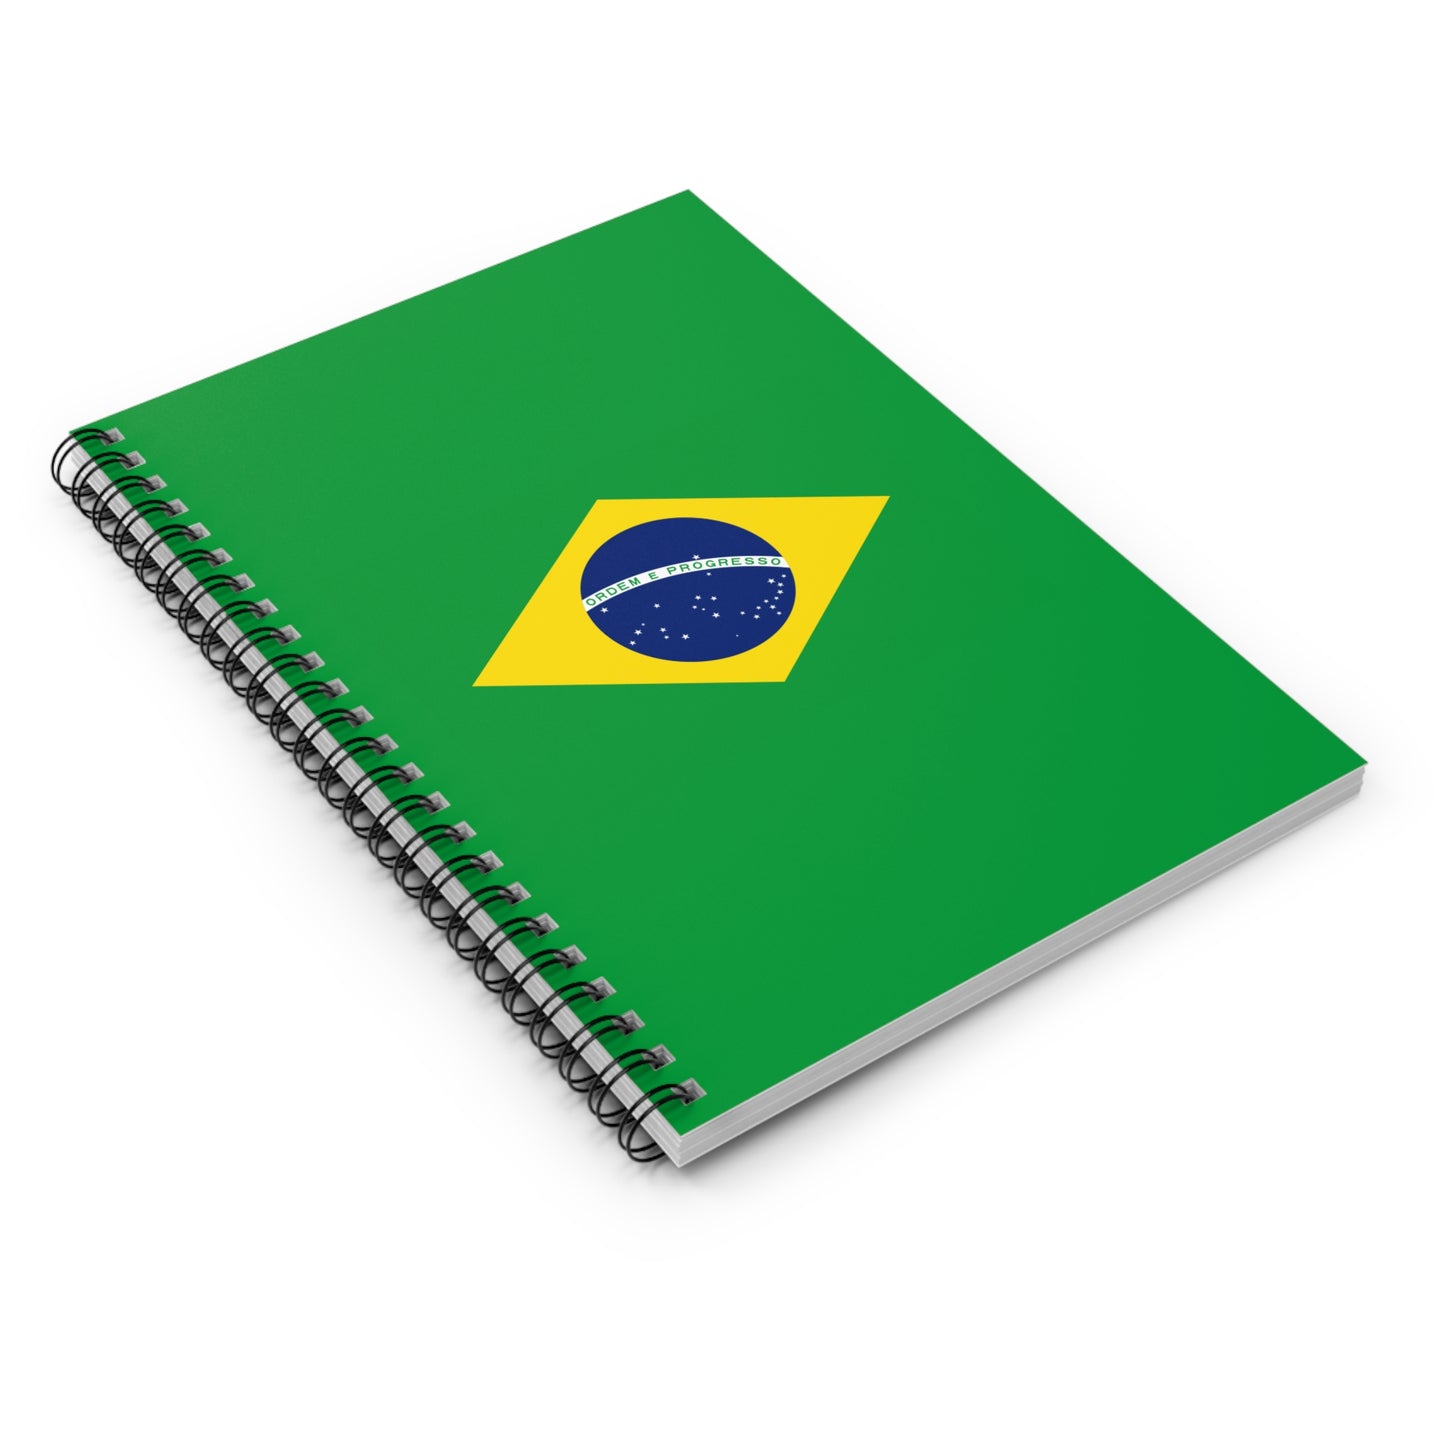 BRAZIL, Spiral Notebook, Ruled Line